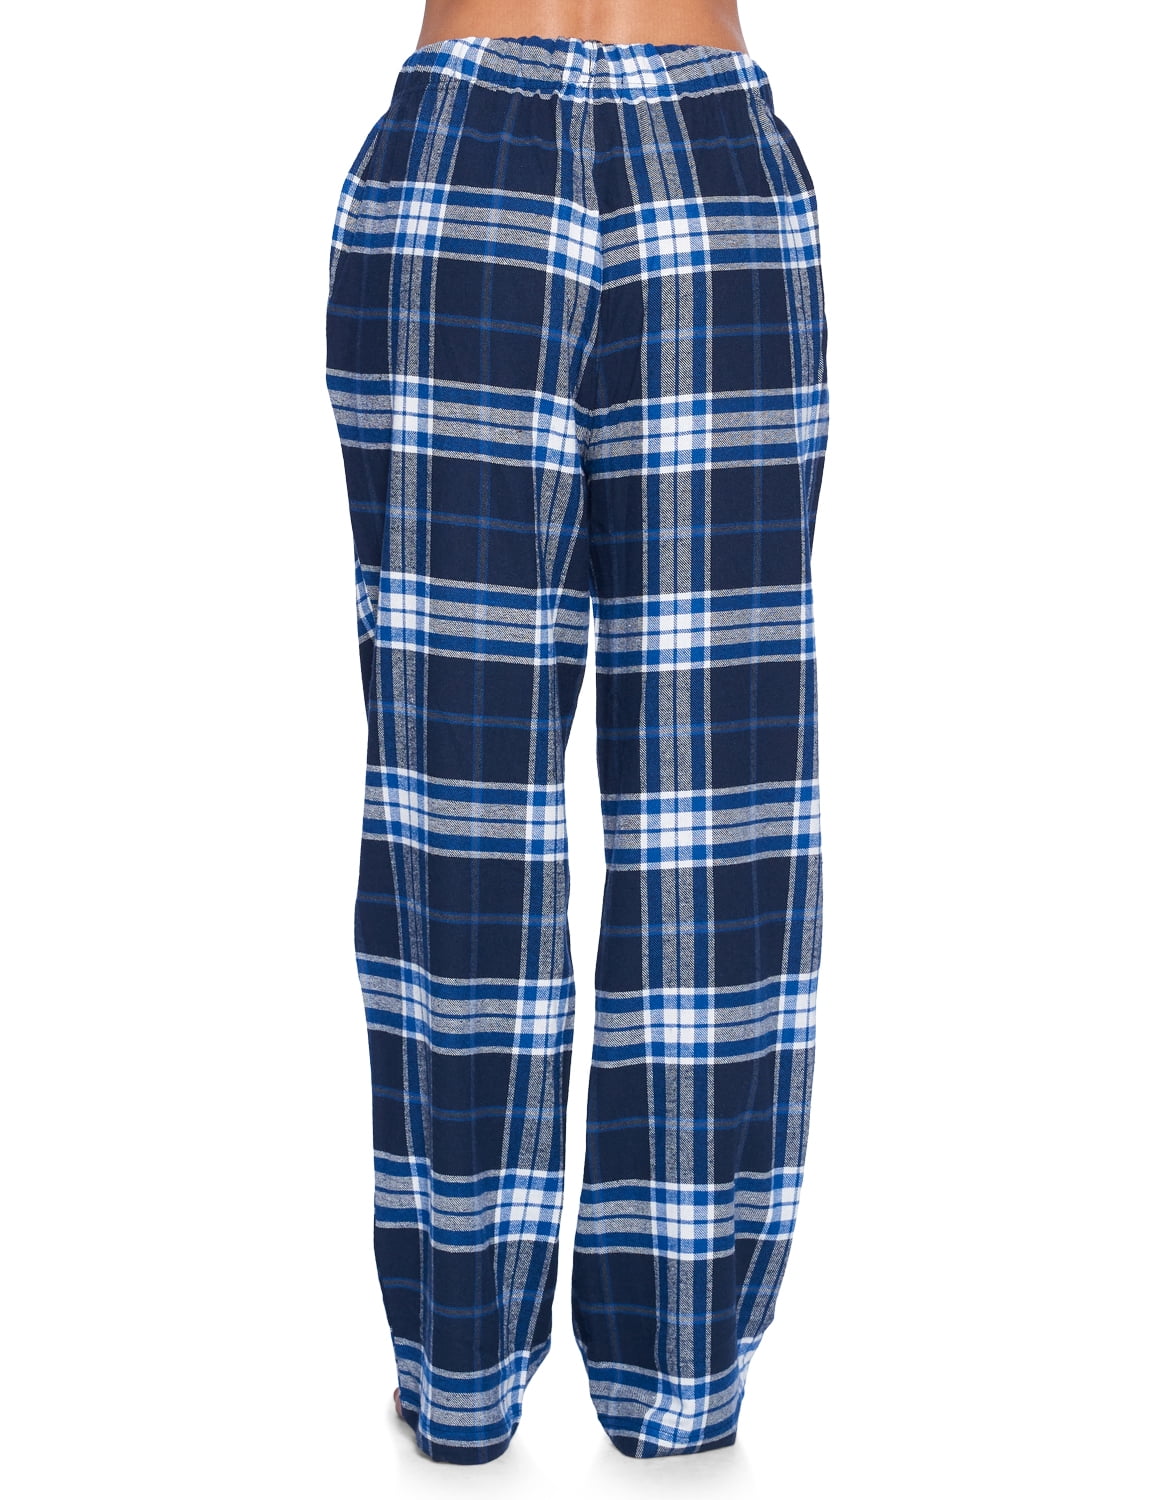 Ashford & Brooks Women's Super Soft Flannel Plaid Pajama Sleep